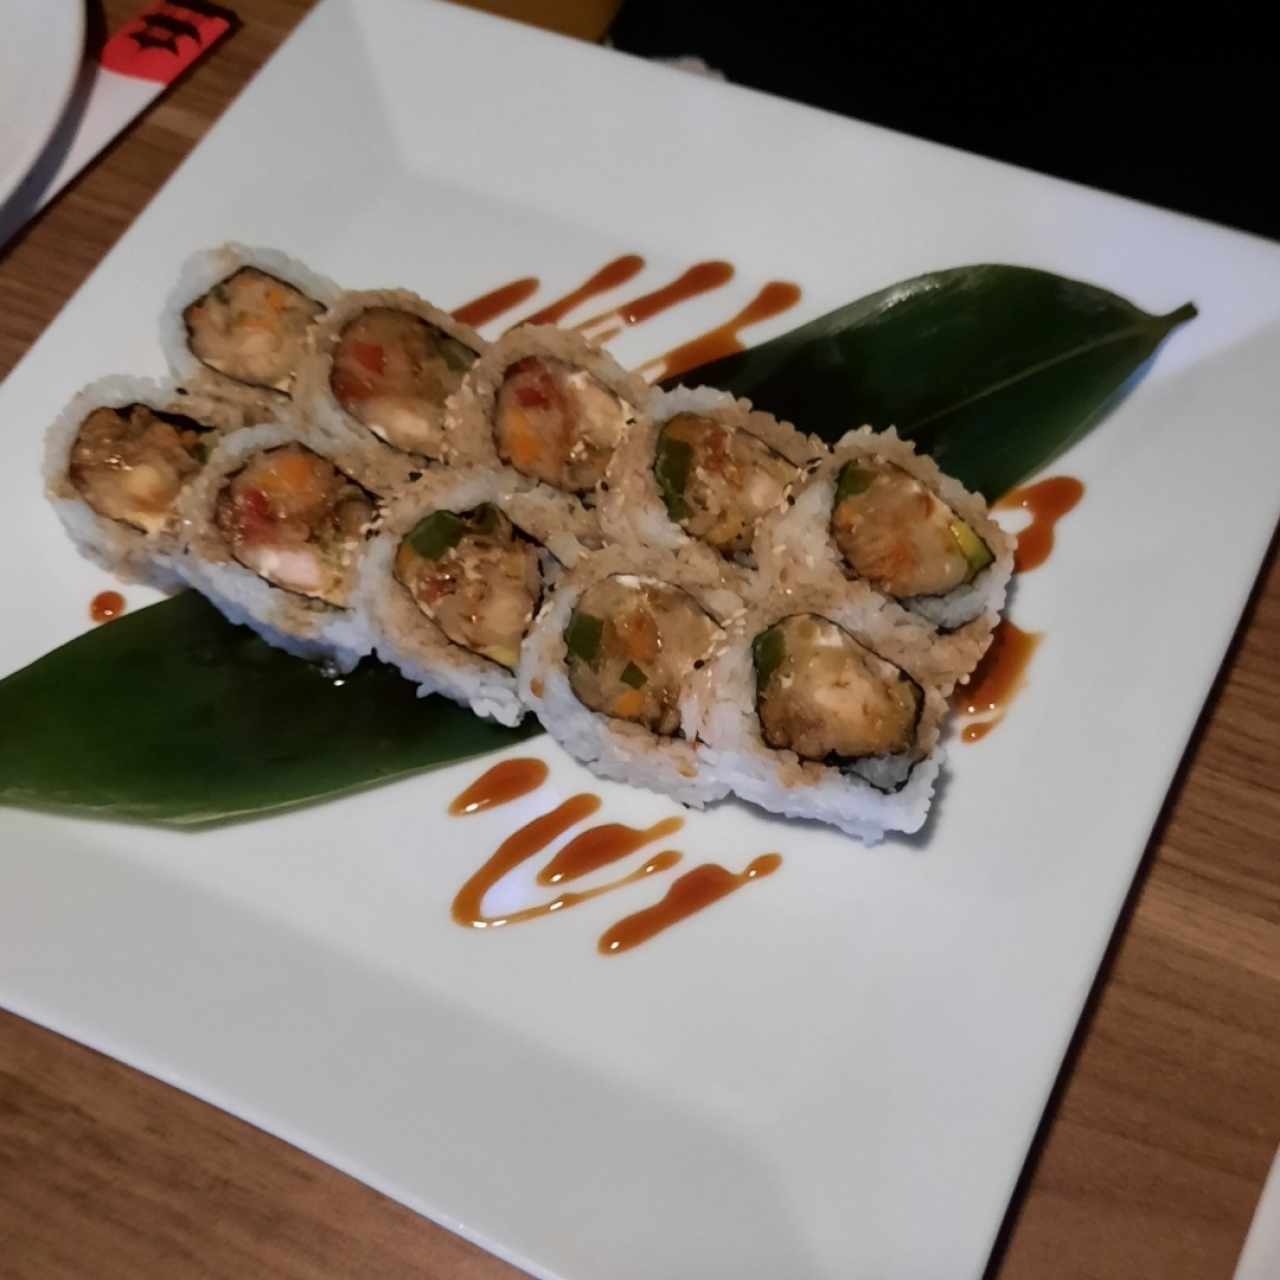 Sushi Rolls - Ebiten